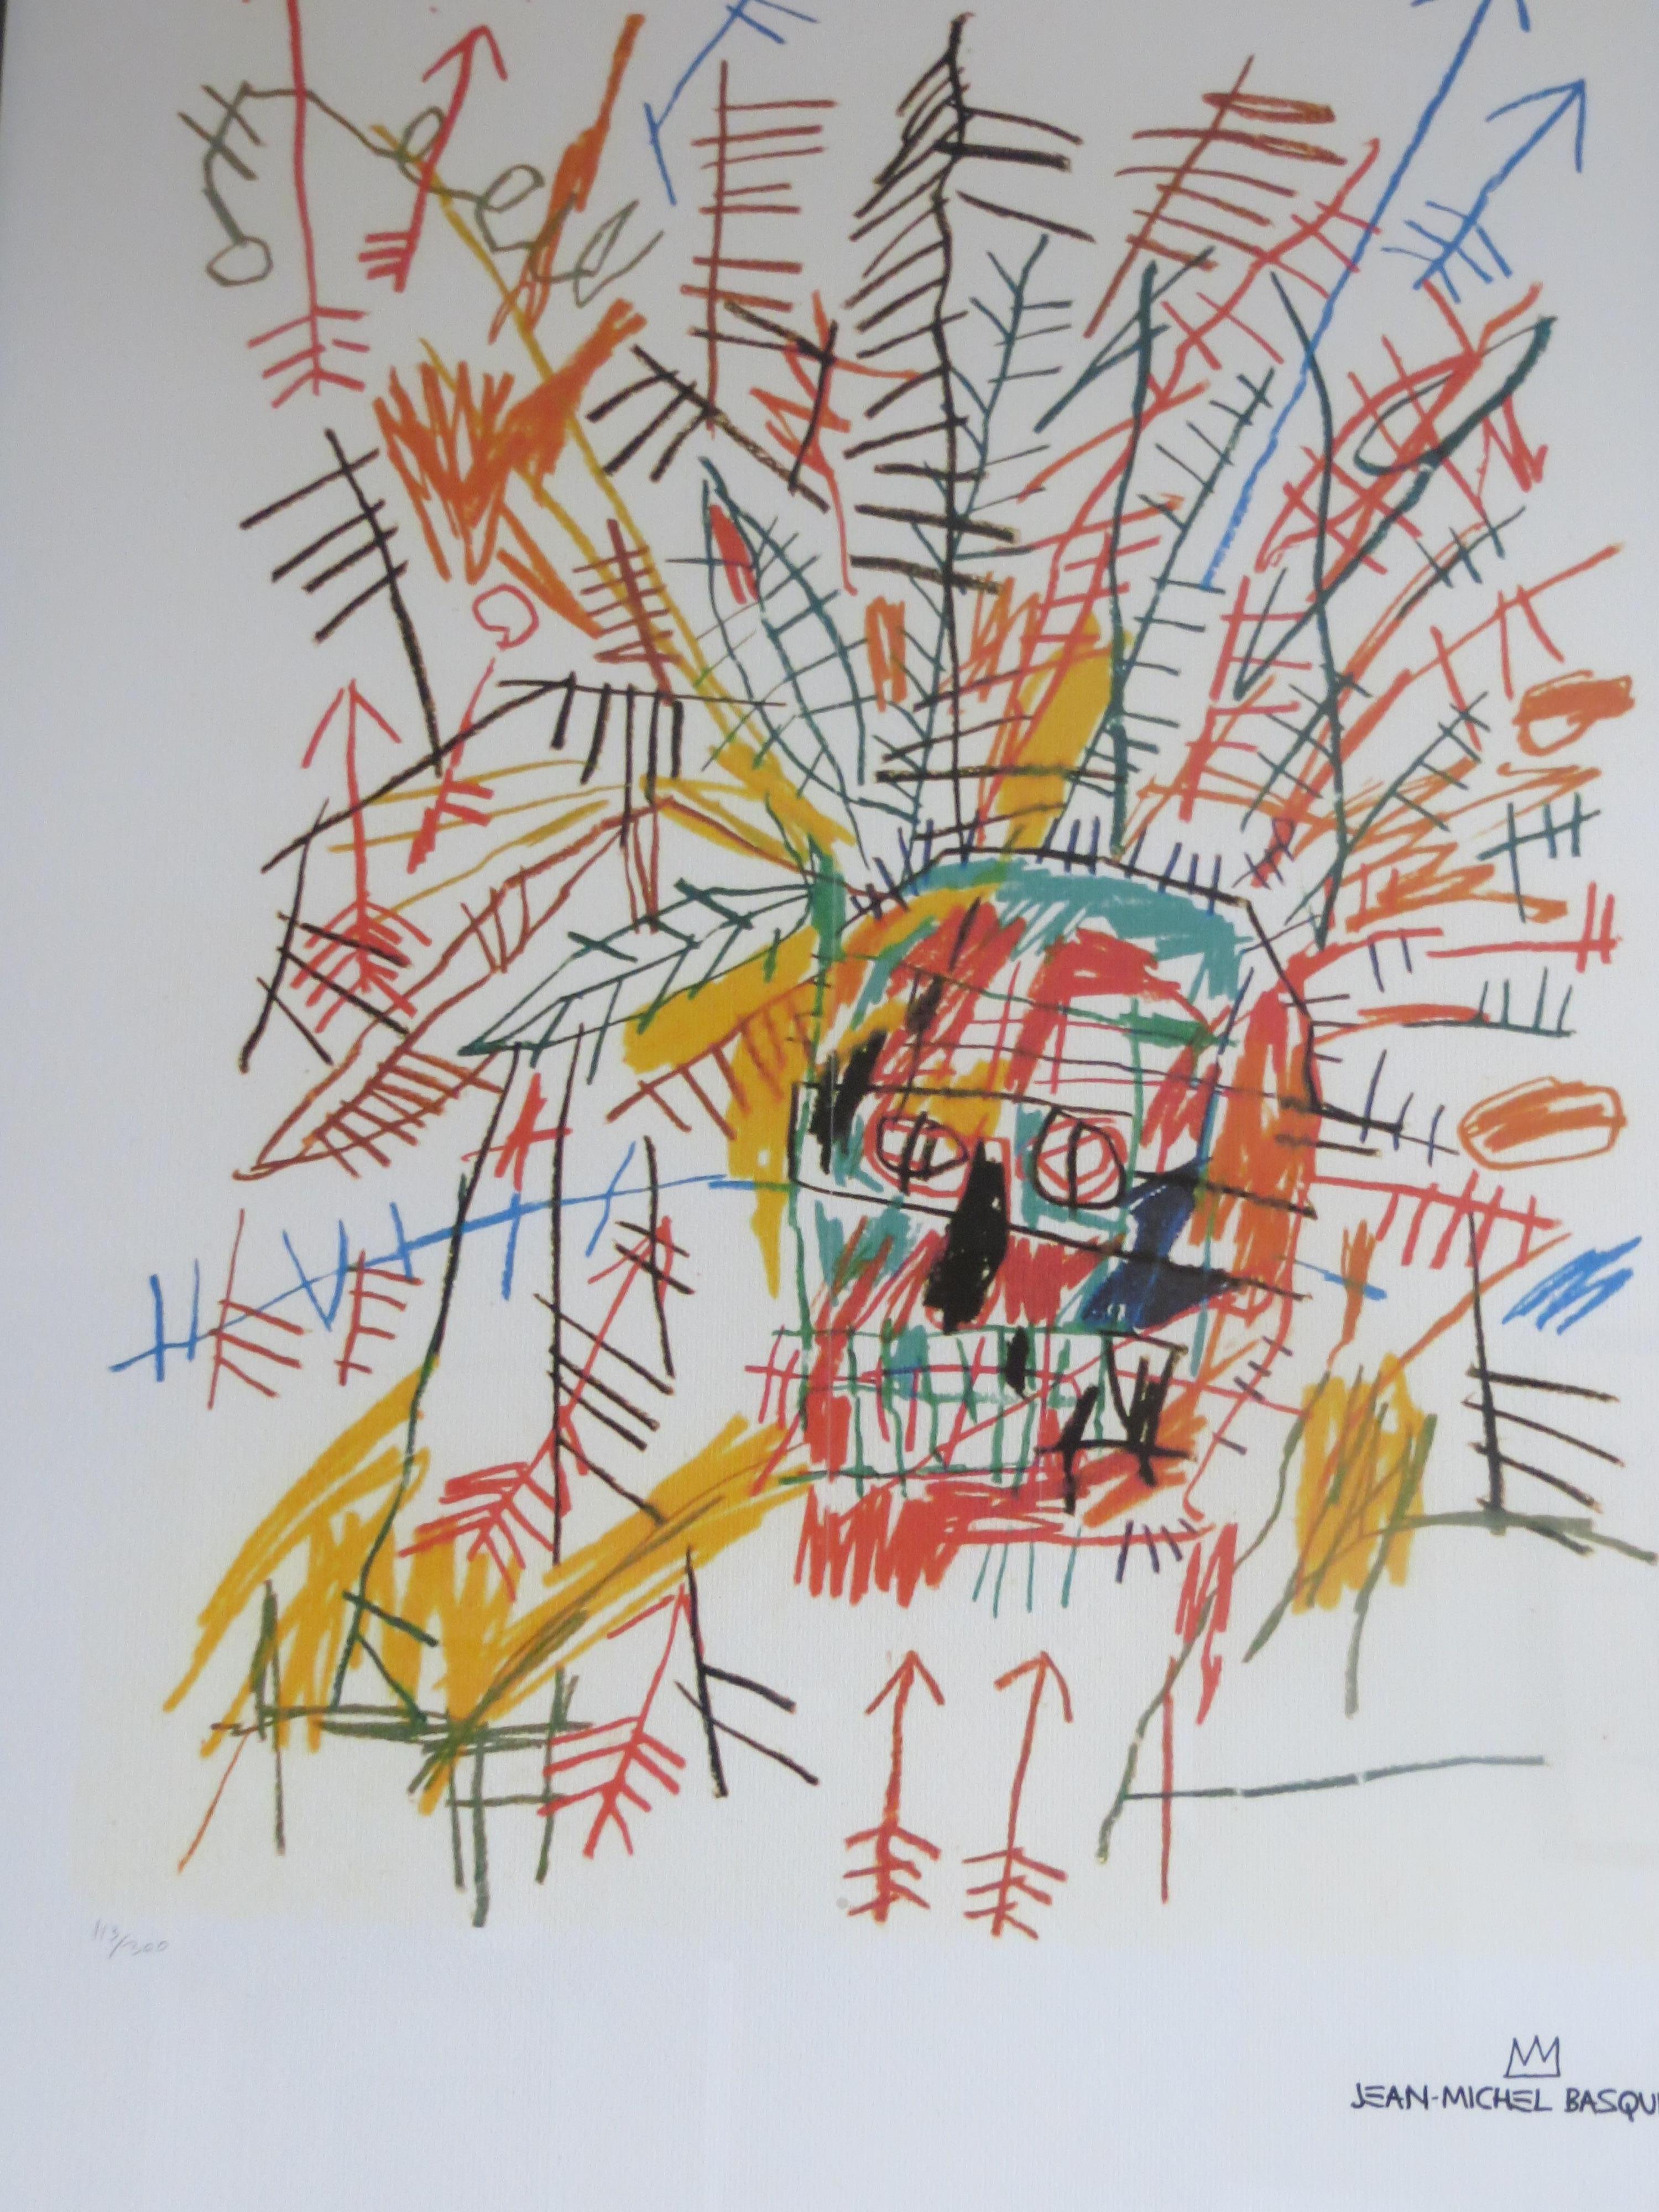 The Estate of Jean-Michel Basquiat,  Lithograph, 1113/ 300 Ltd  - Street Art Print by after Jean-Michel Basquiat